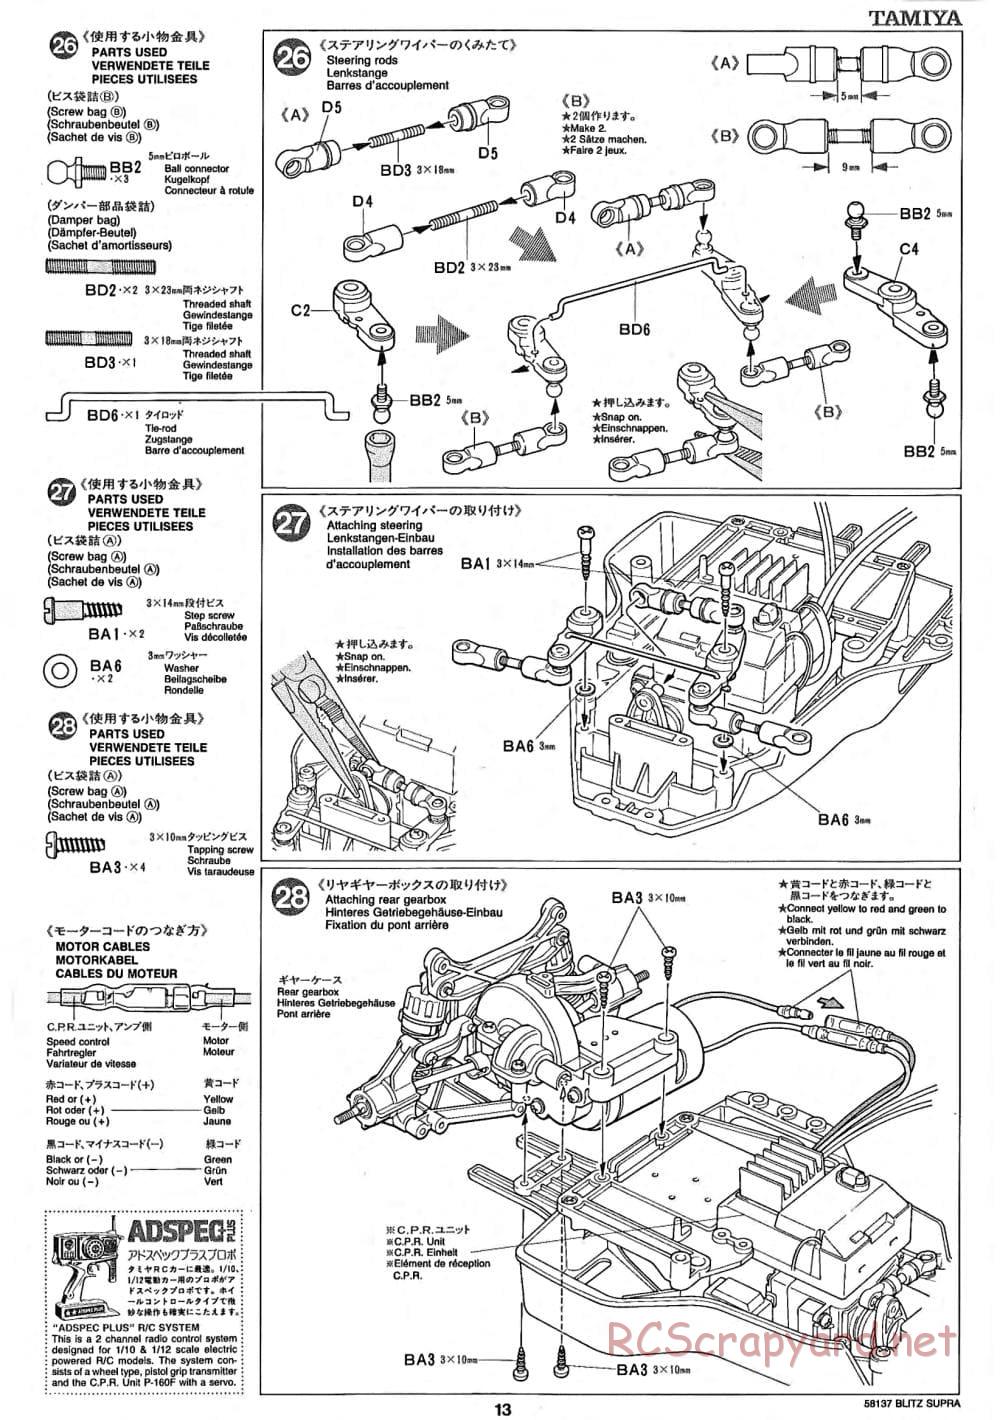 Tamiya - Blitz Toyota Supra Gr.N - TA-02 Chassis - Manual - Page 13